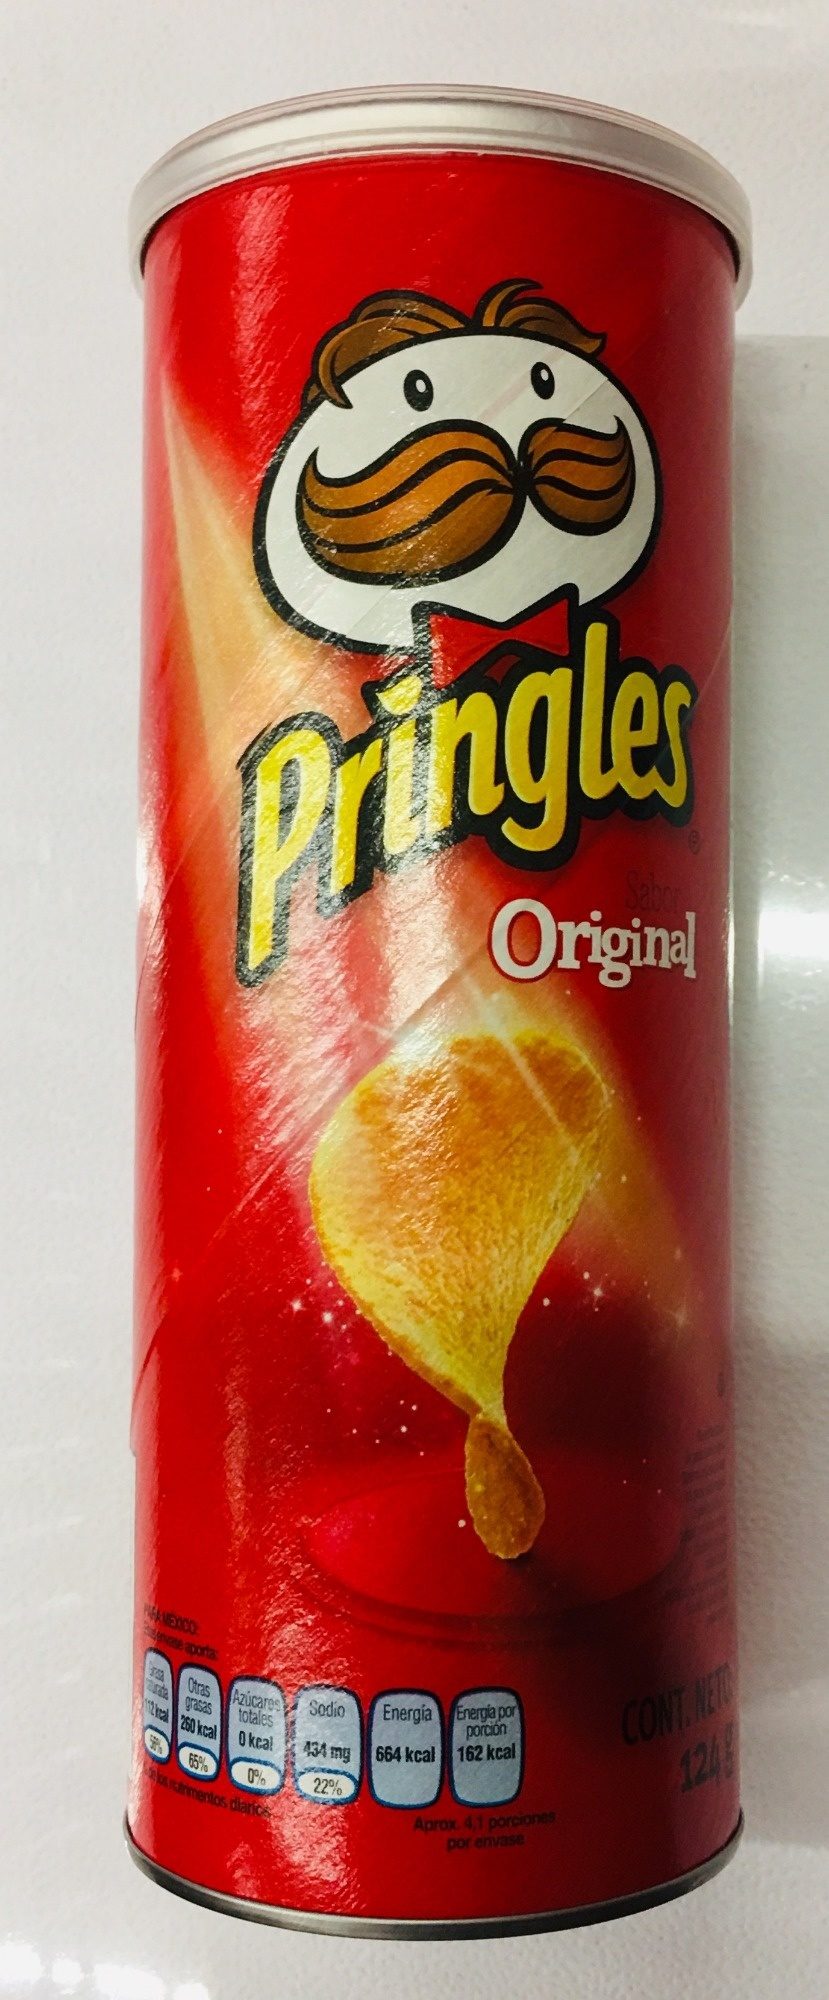 Pringles - Original - Product - es